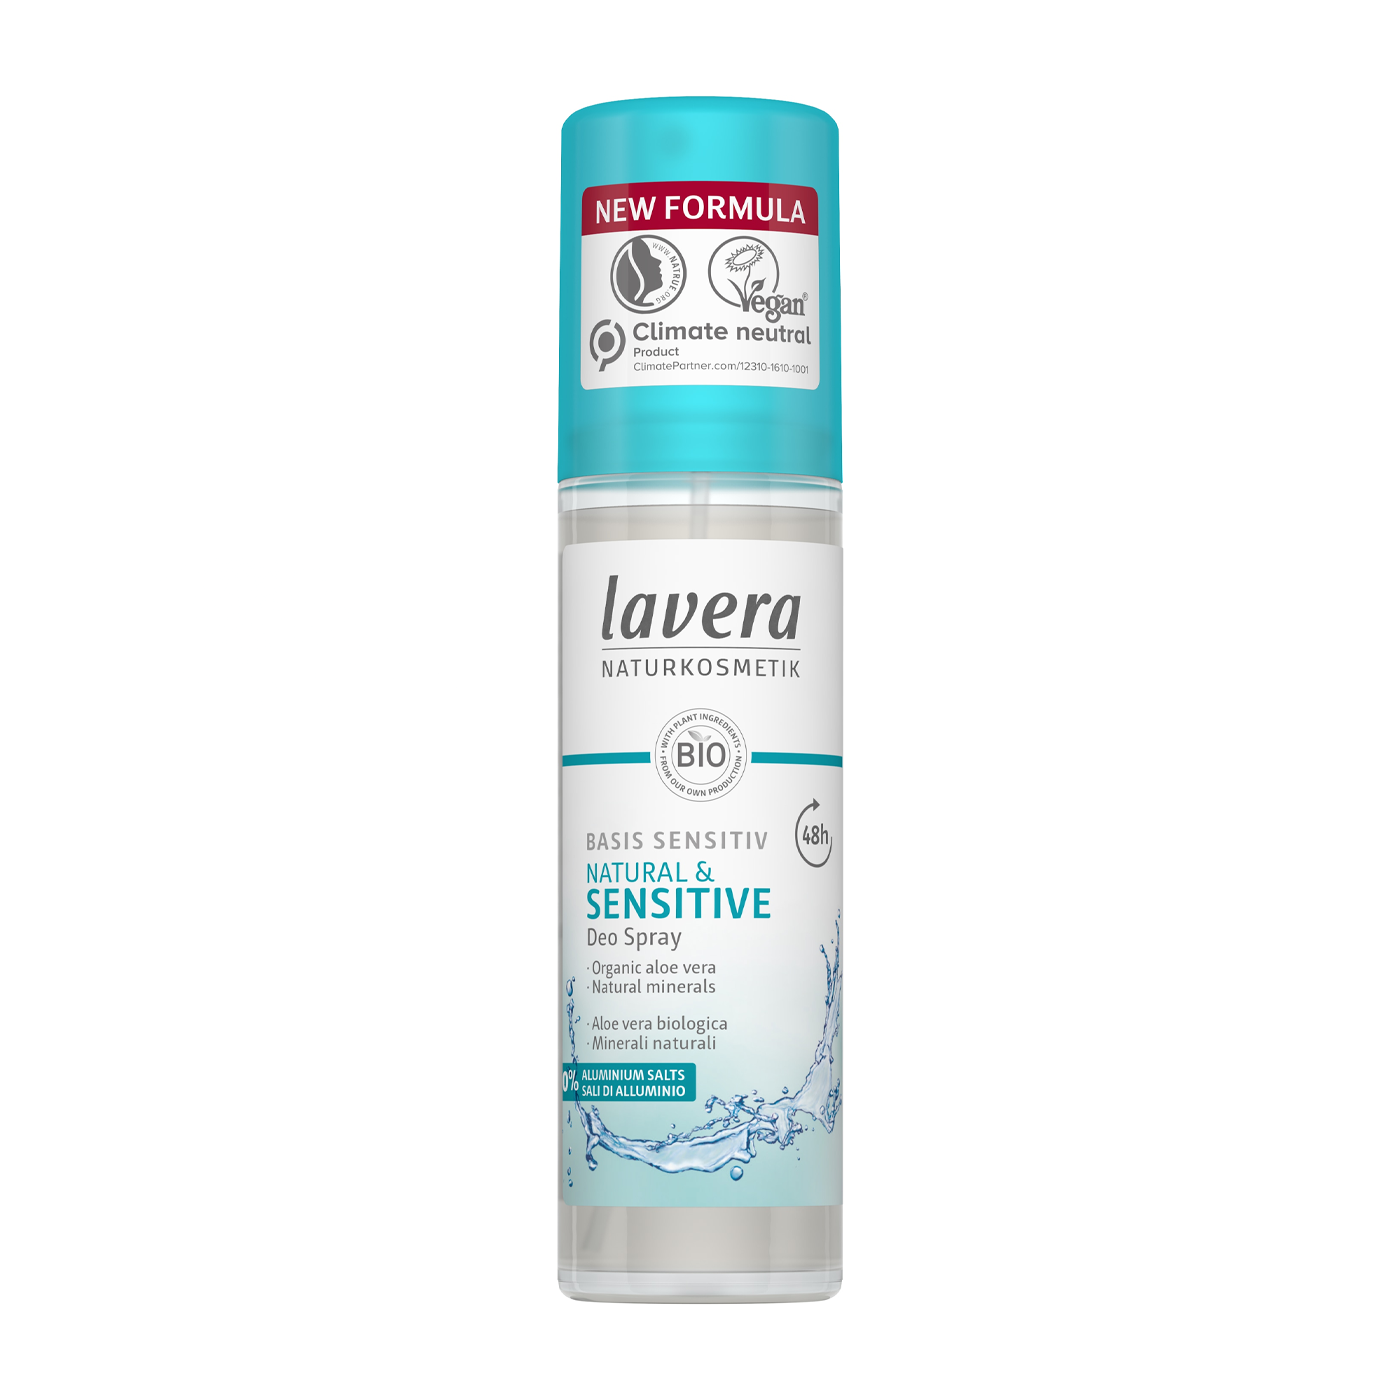 Lavera Deodorant Spray 75ml, Basis Sensitiv Natural & Sensitive